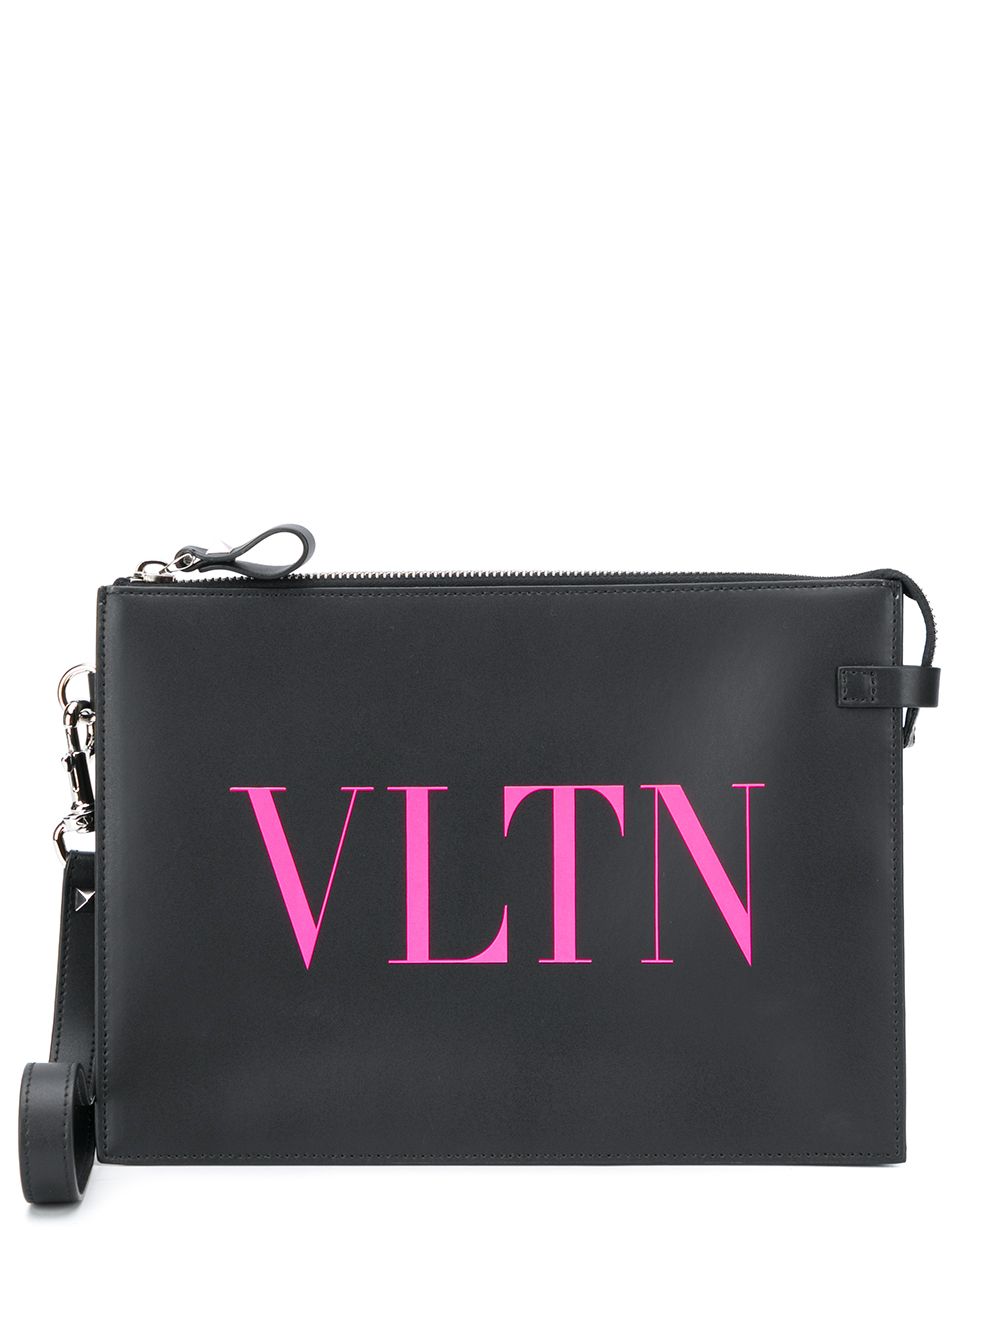 фото Valentino garavani клатч с логотипом vltn